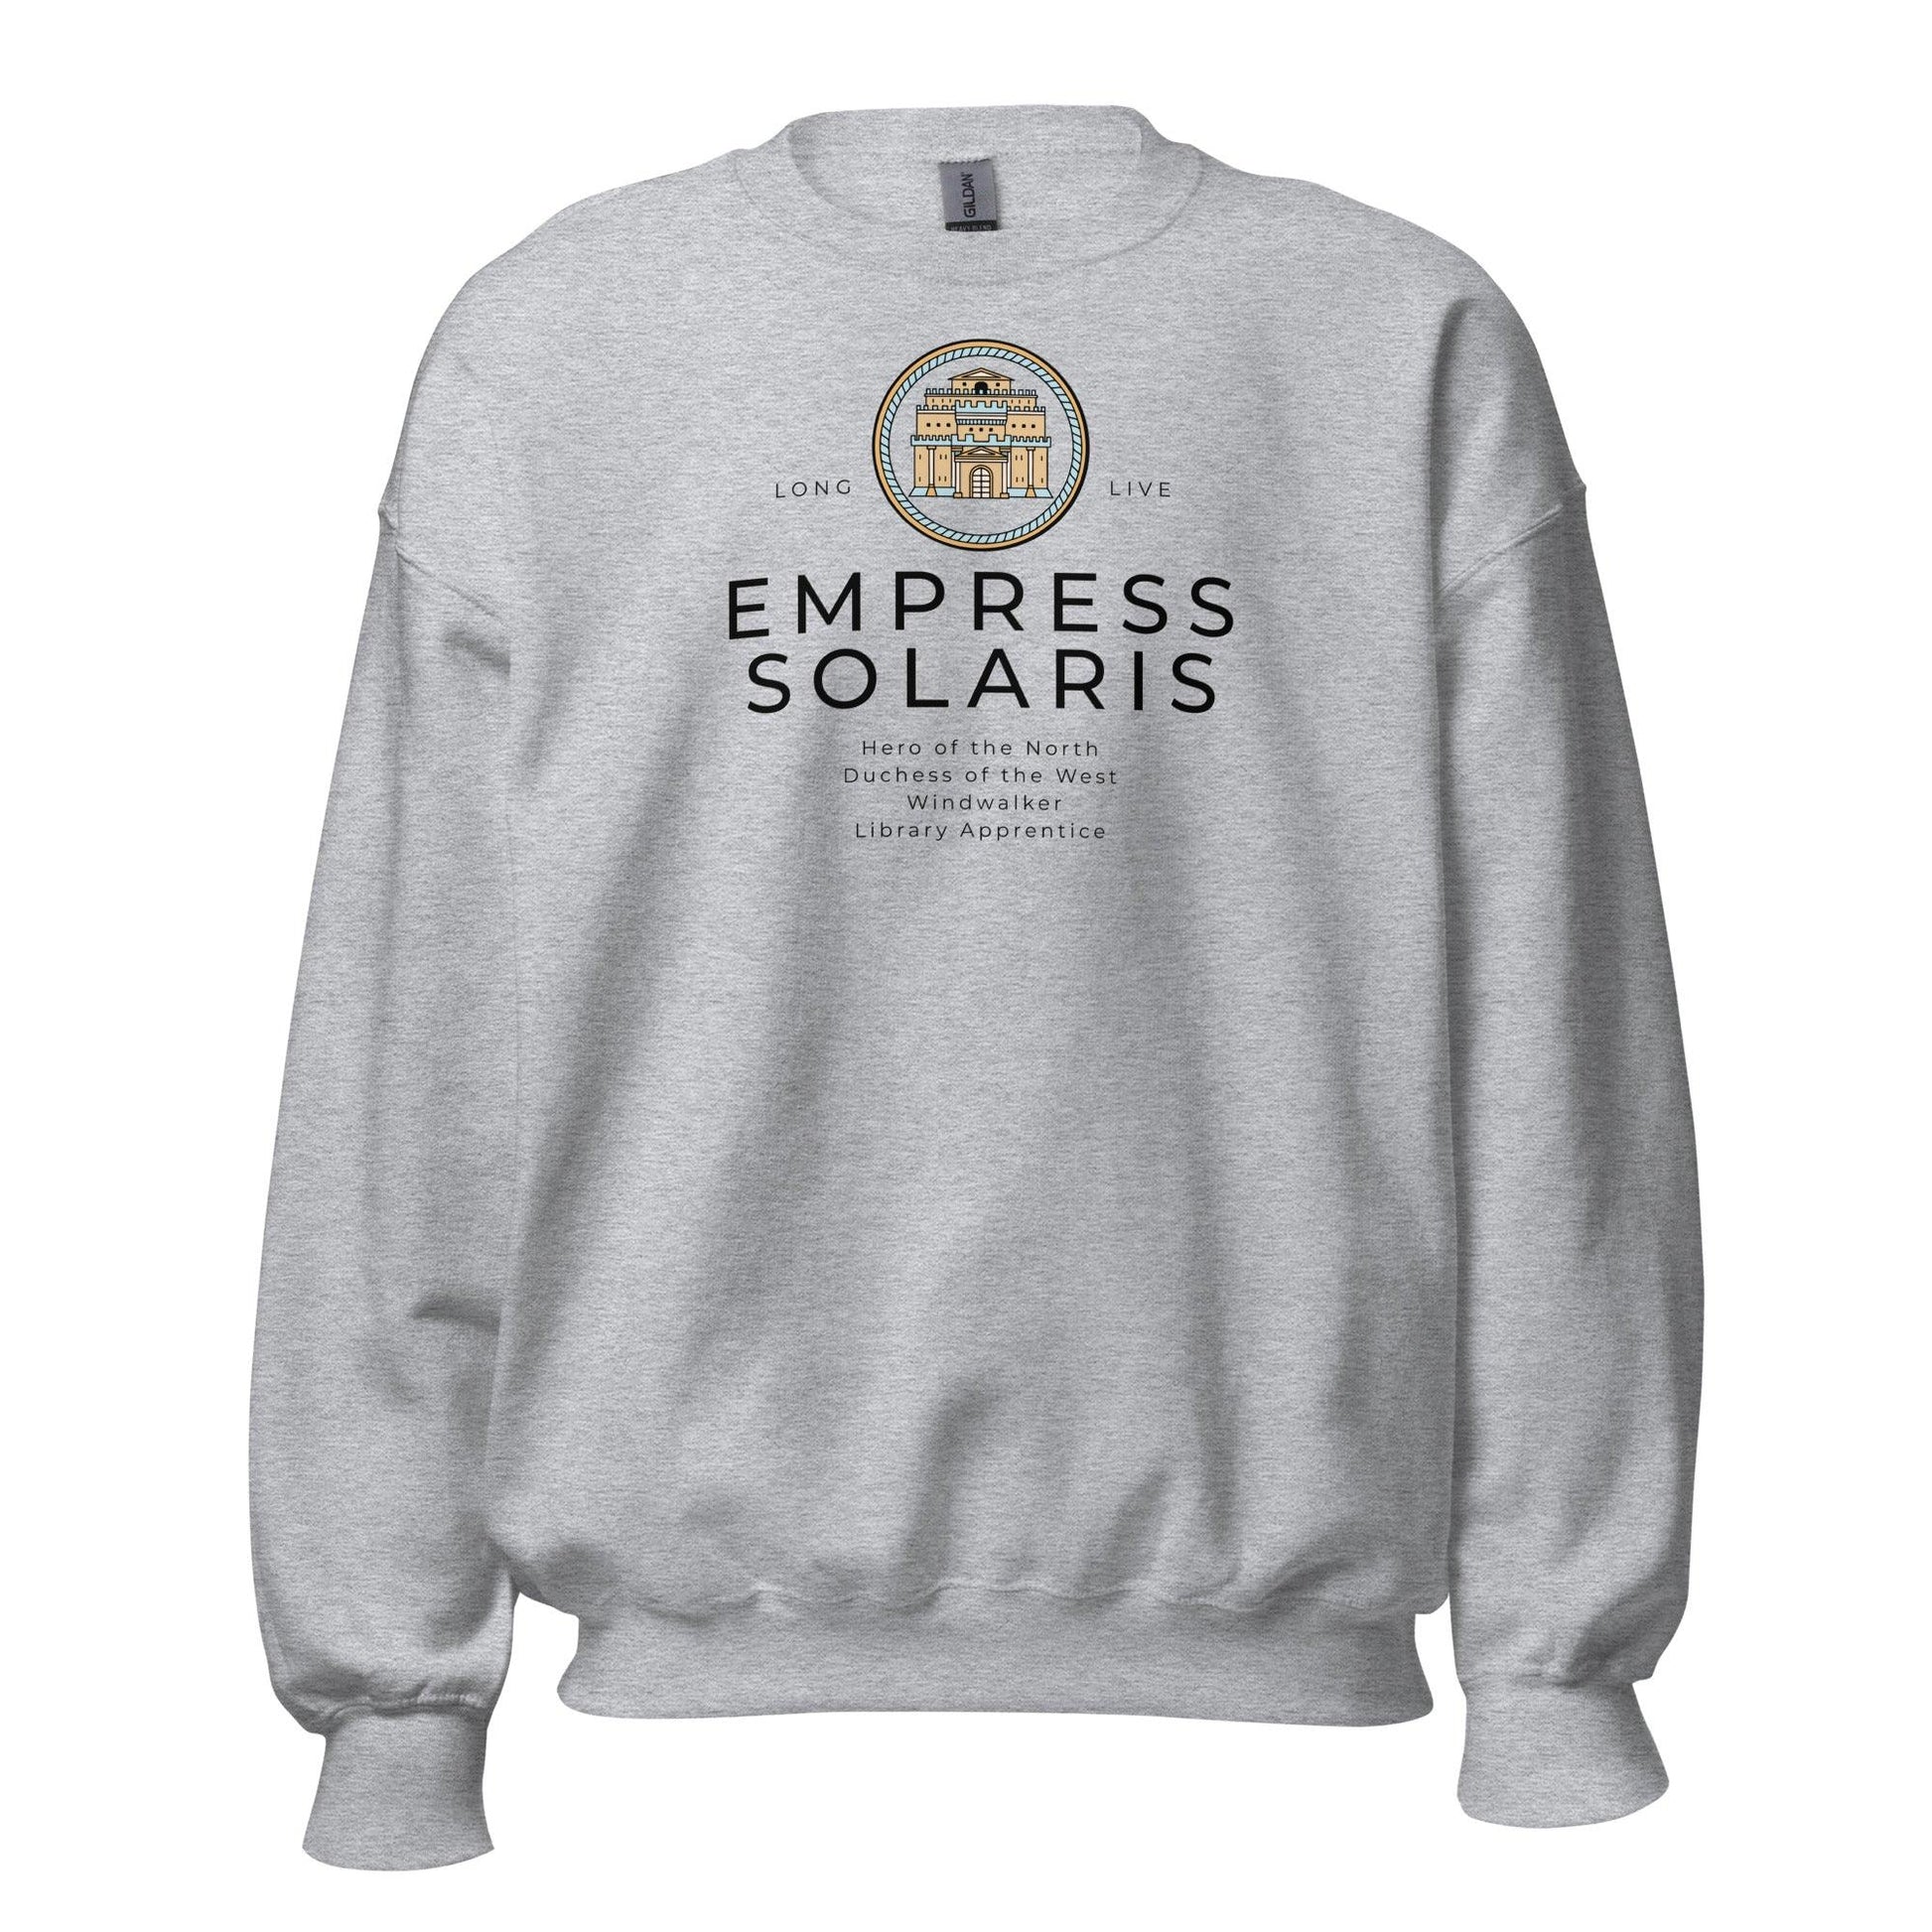 Empress Vhalla Yarl Solaris Sweatshirt - The Bean Workshop - air awakens, elise kova, sweatshirt